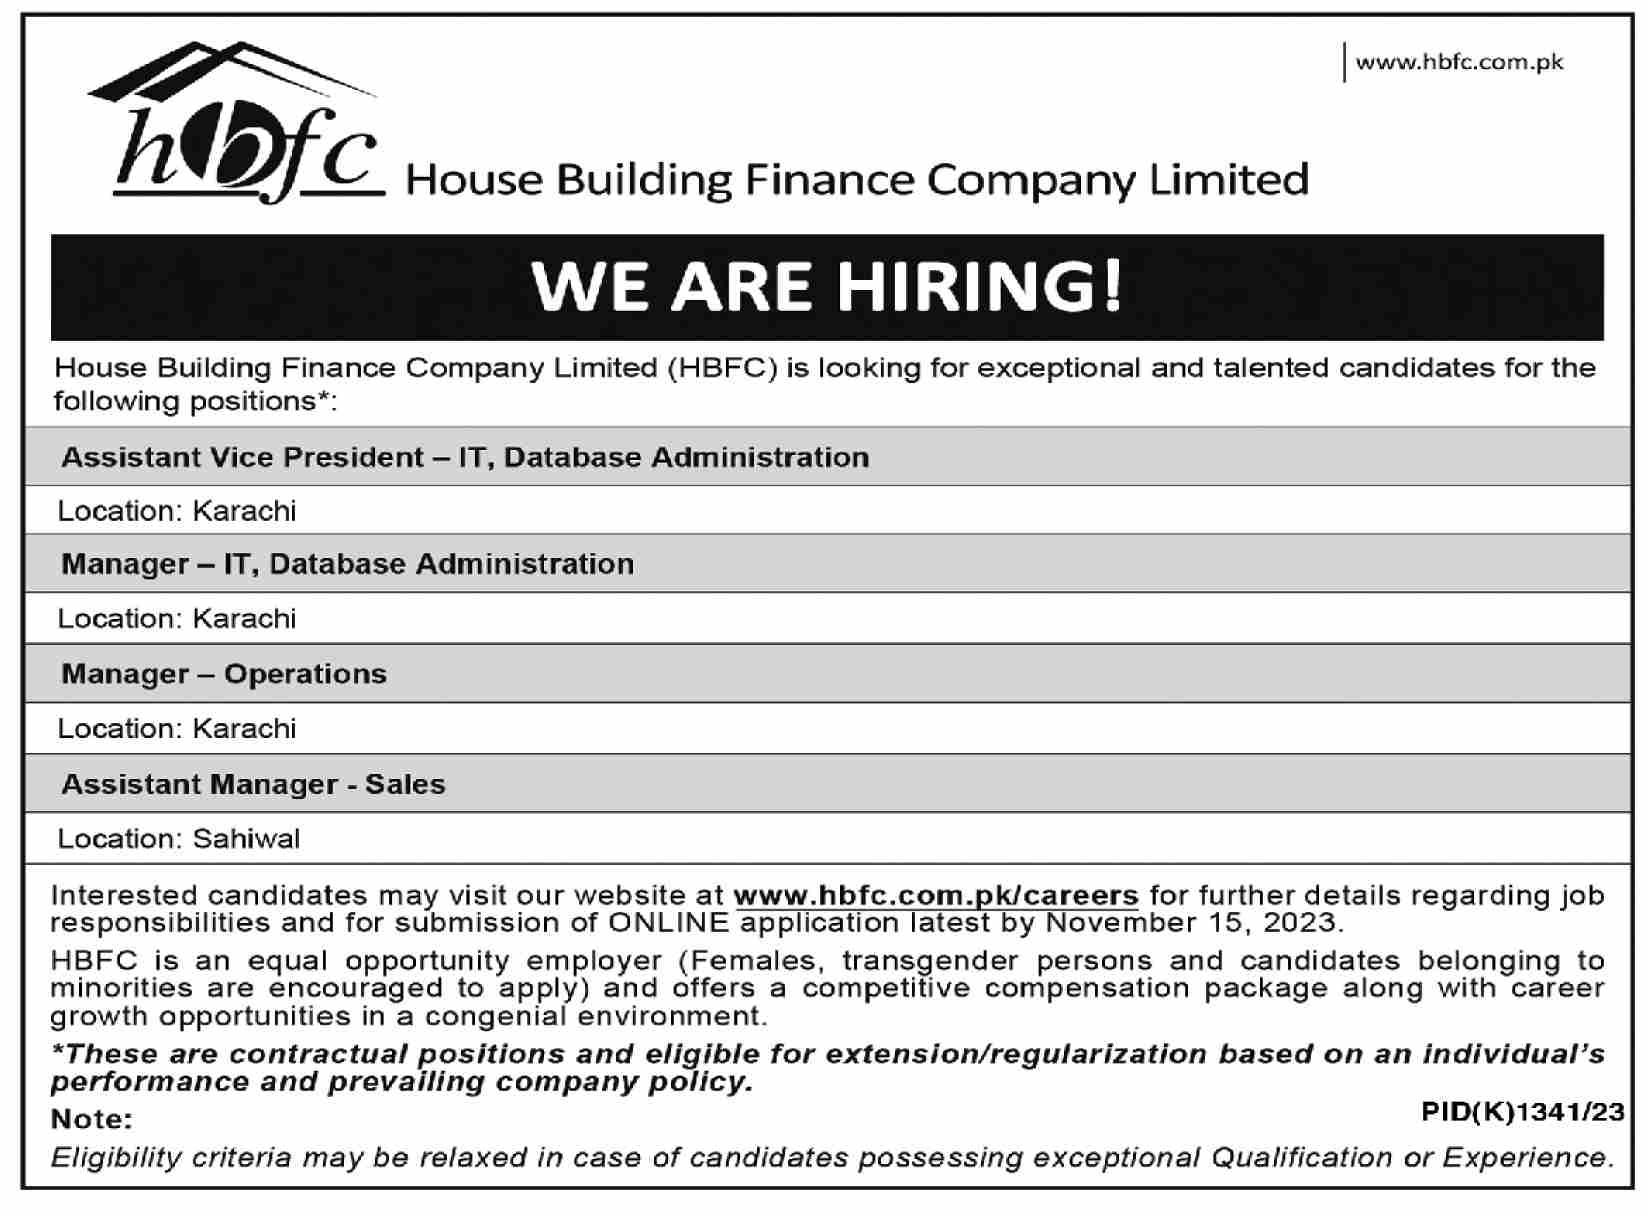 HBFC House Building Finance Company Limited IT CS Jobs Karachi Sahiwal